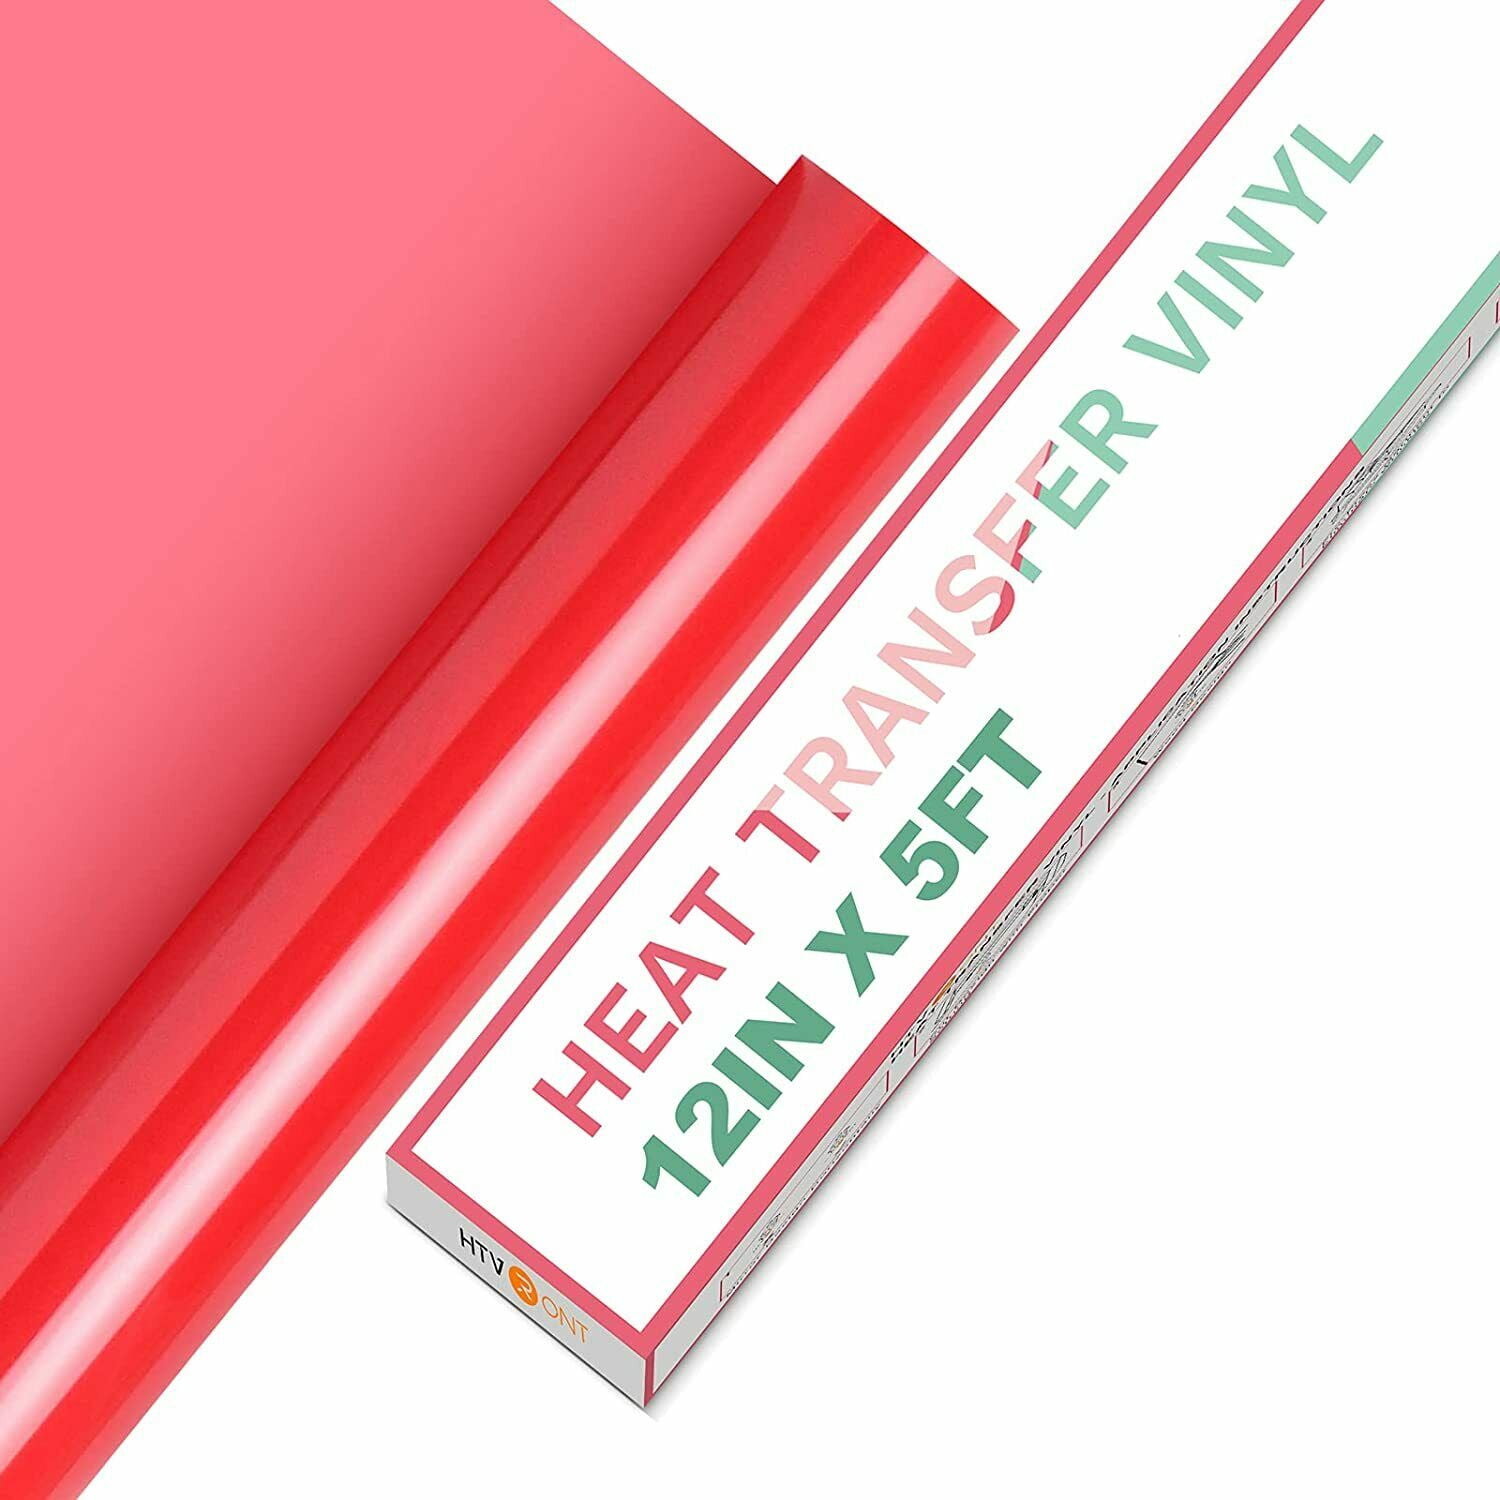 VINYL FROG Heat Transfer Vinyl Roll HTV Vinyl - 12x5ft Red Iron on Vinyl  for T-Shirts, Heat Press Vinyl for DIY Craft Designs (Red)